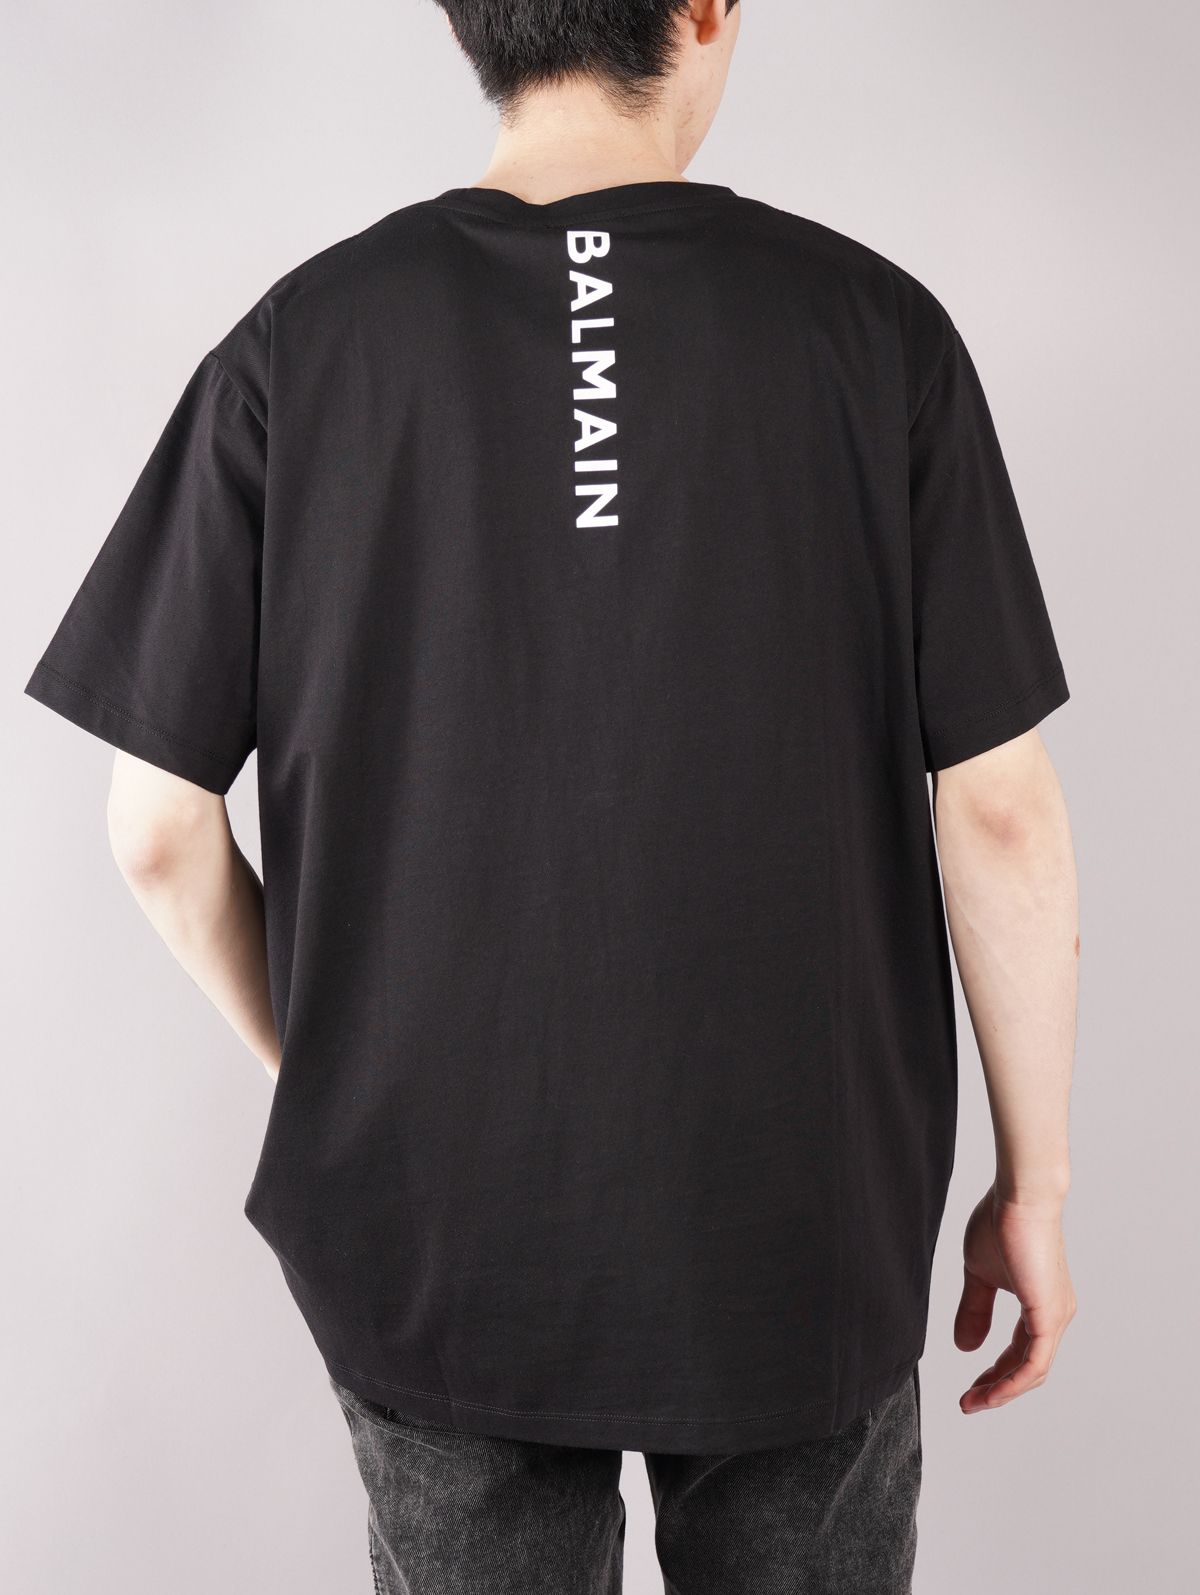 BALMAIN - 【ラスト1点】BALMAIN BUCK T-SHIRT / バックロゴ Tシャツ